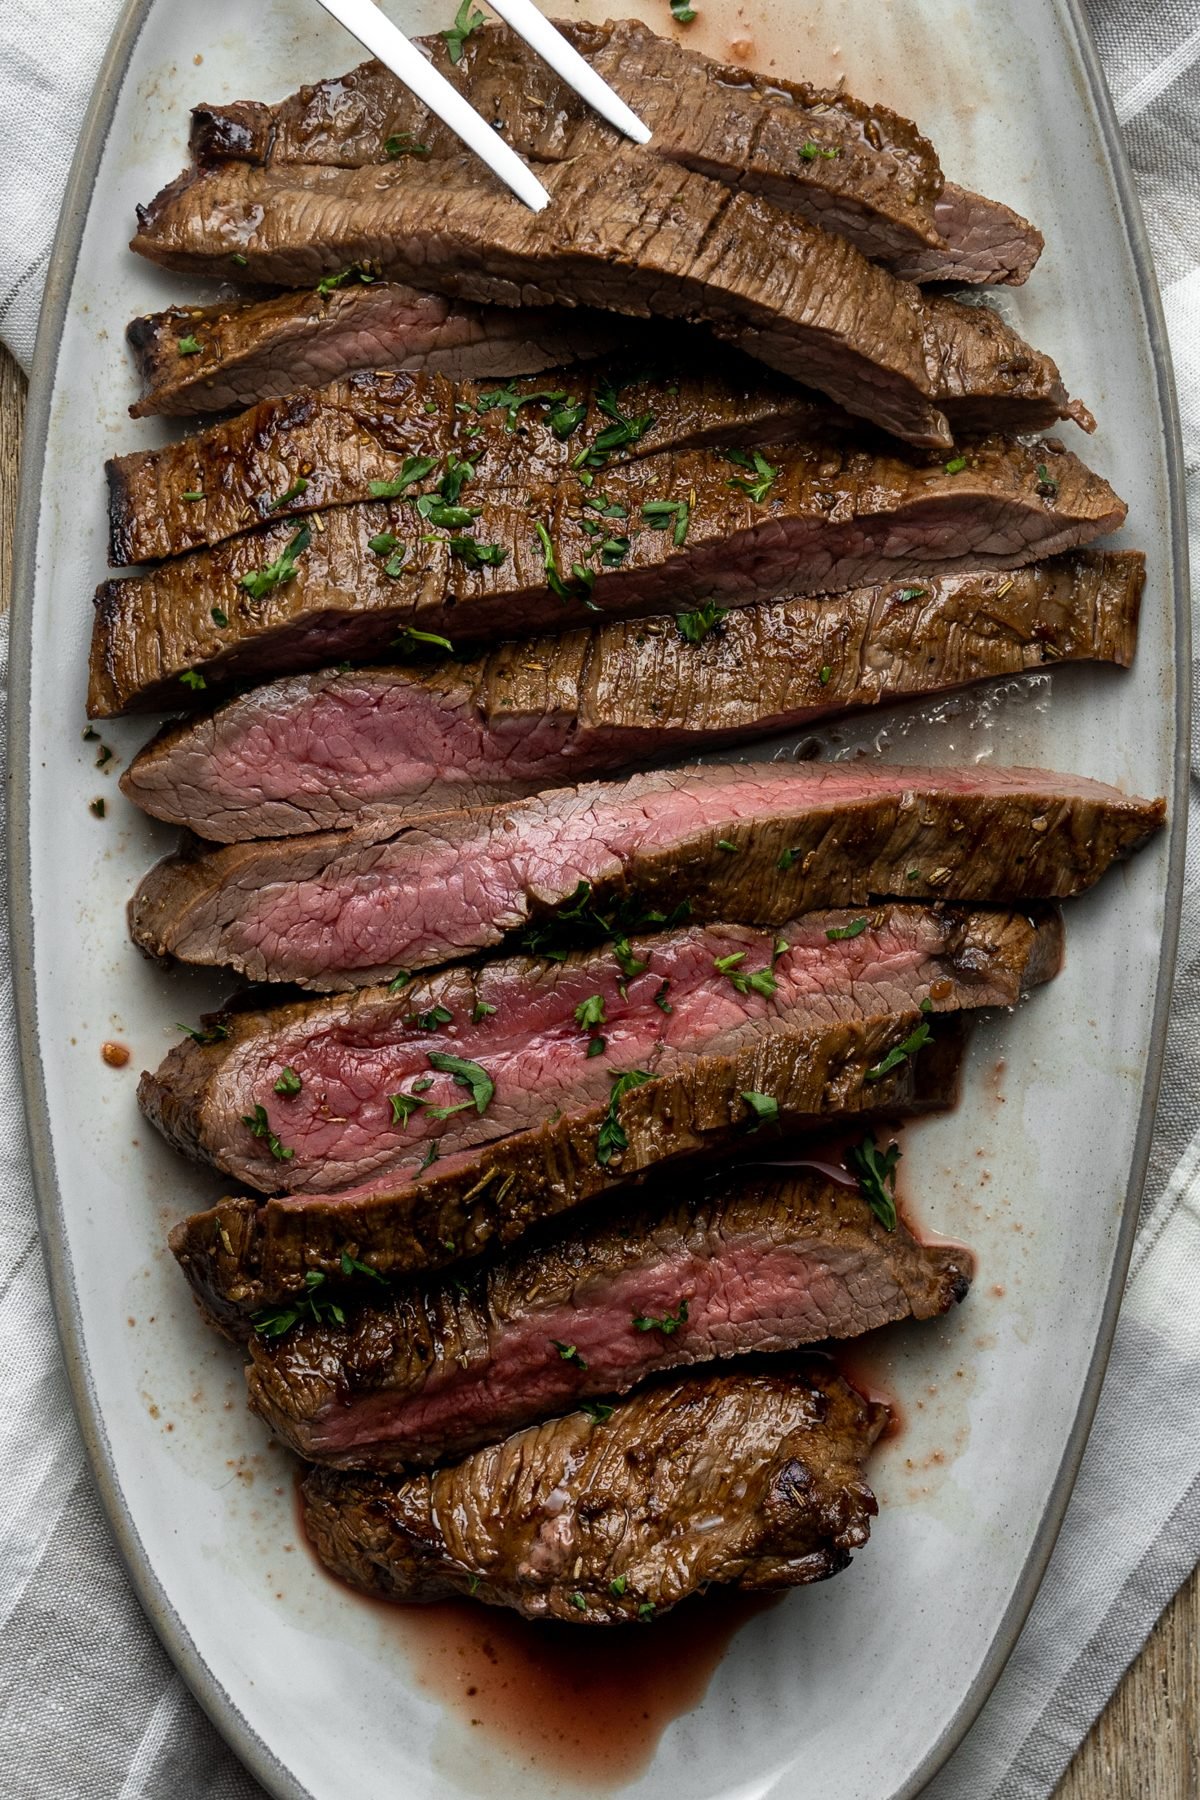 Medium rare strips of flank steak on a serving platter.